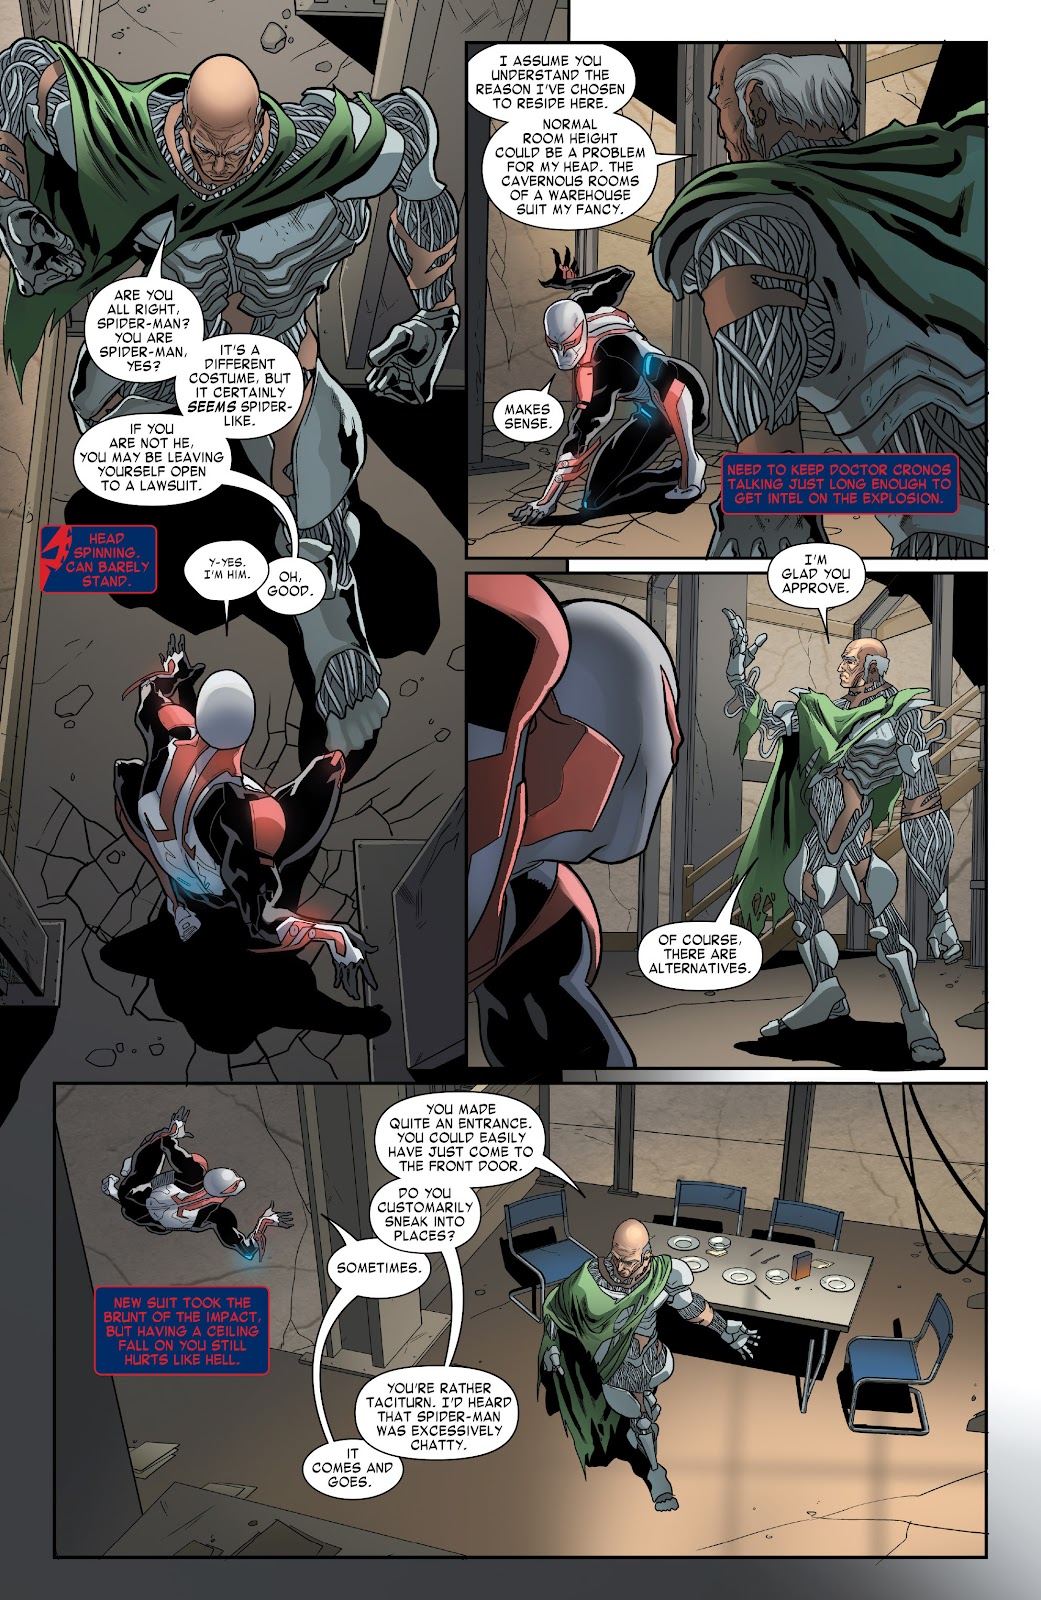 Spider-Man 2099 (2015) issue 3 - Page 3